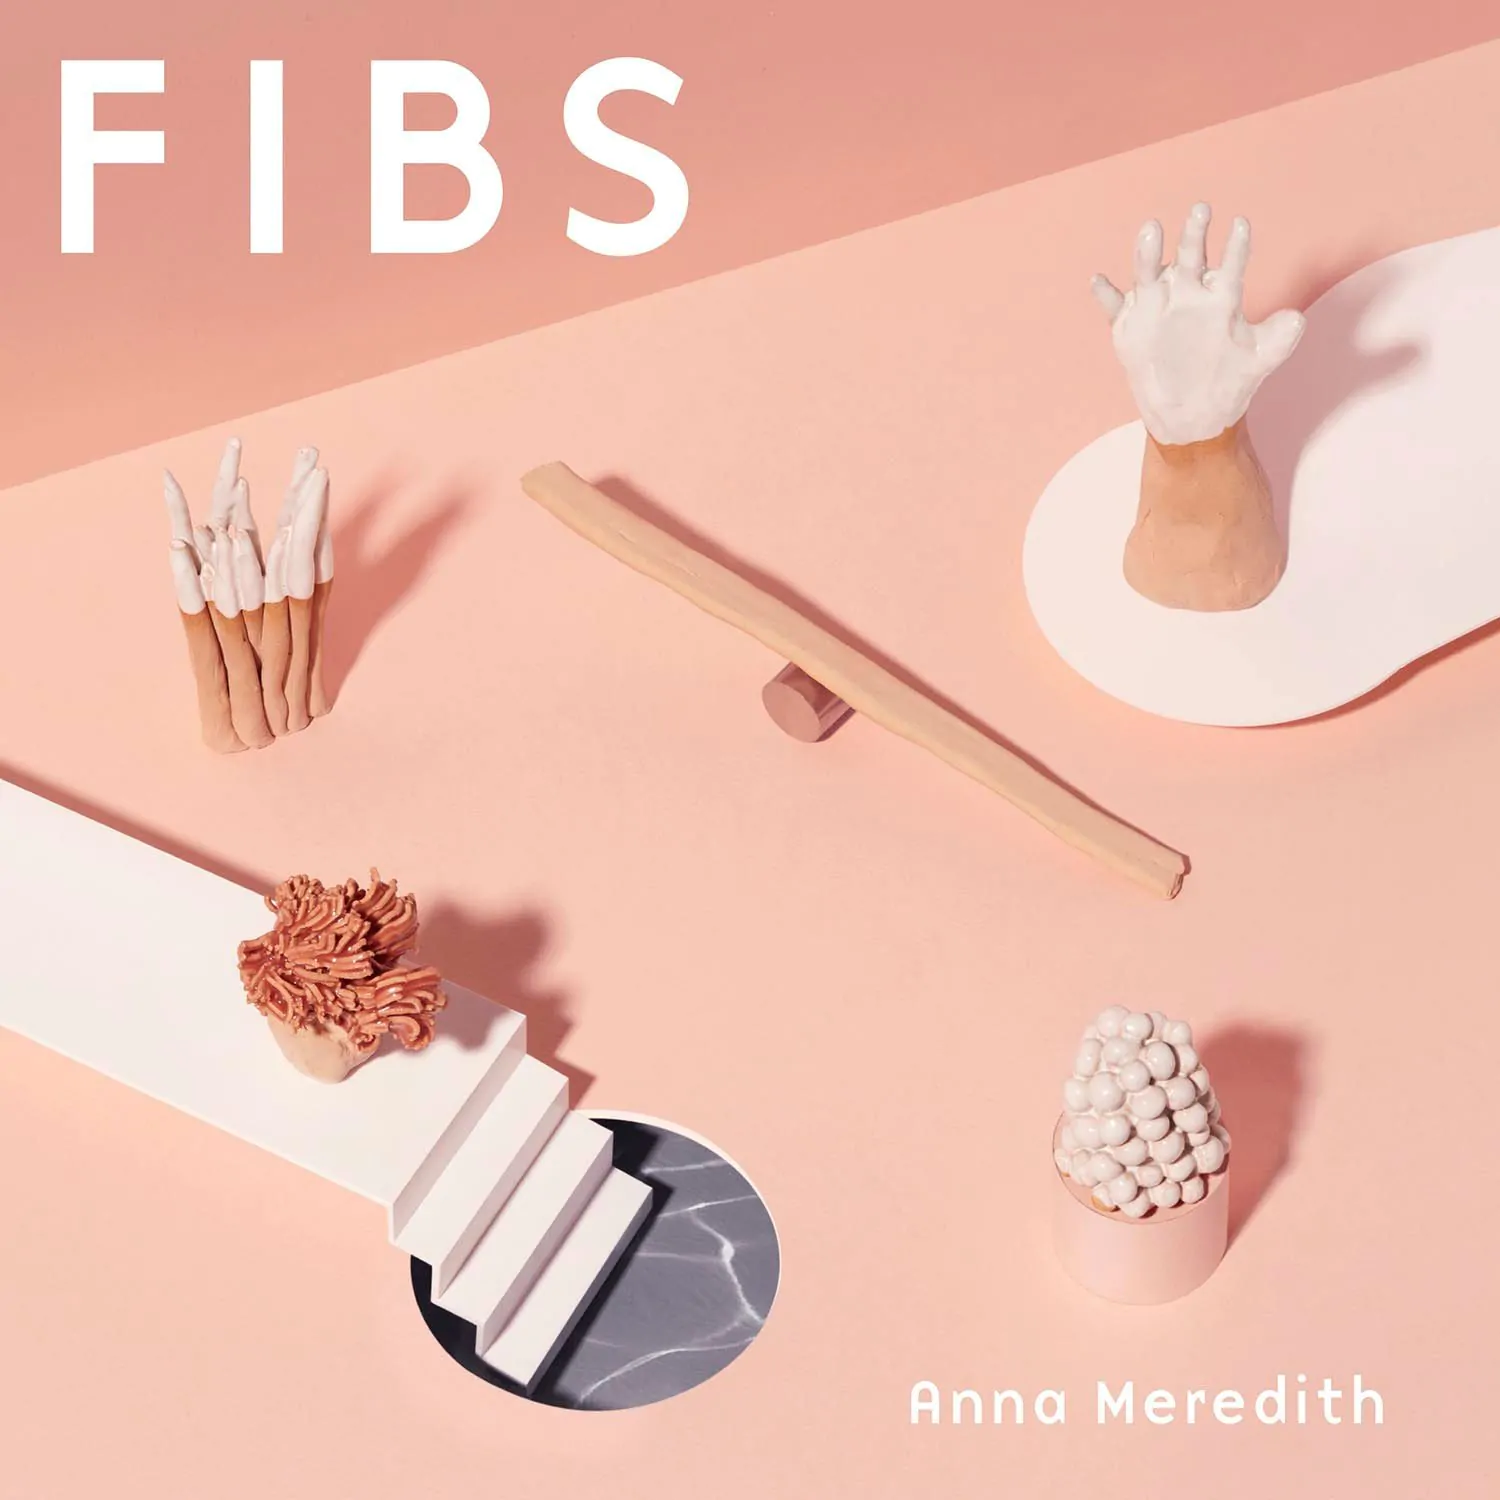 ALBUM REVIEW: Anna Meredith – FIBS